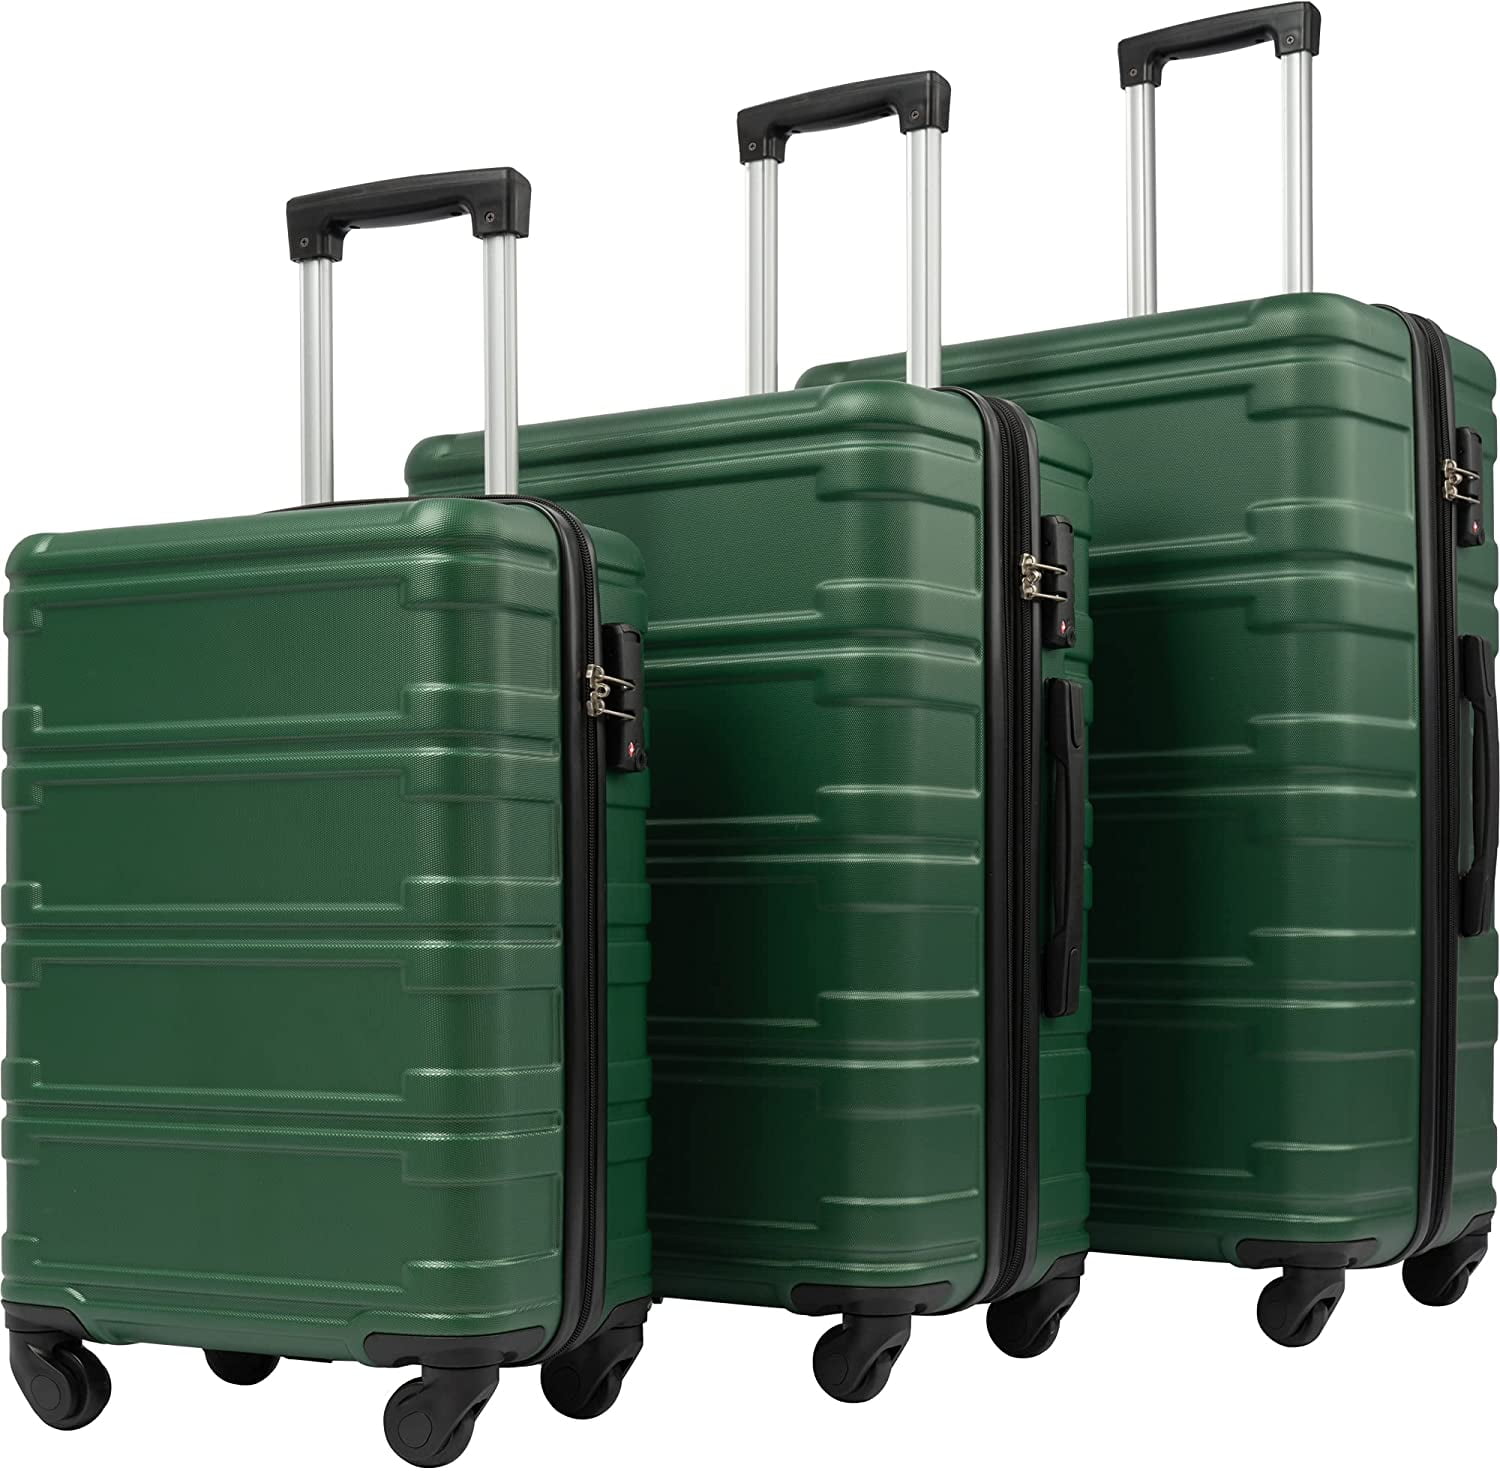 3 Pcs Luggage Set with TSA Lock, Lightweight Expandable Luggage Spinner ...